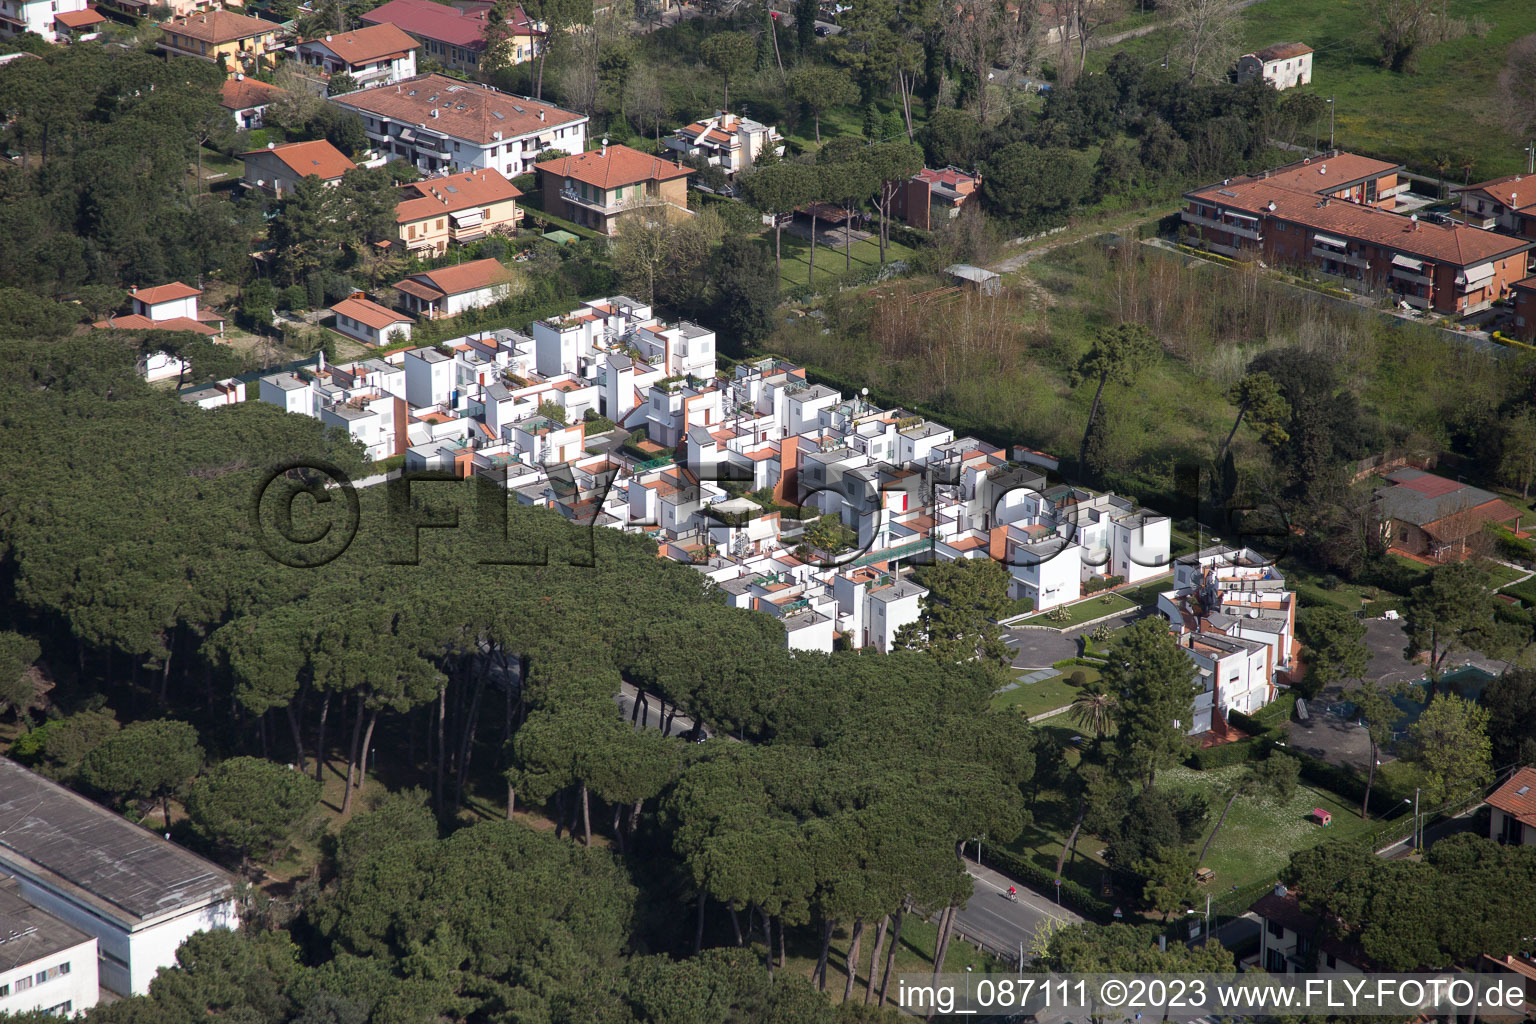 Luftbild von Marina di Massa(I-Toskana) im Bundesland Toscana, Italien